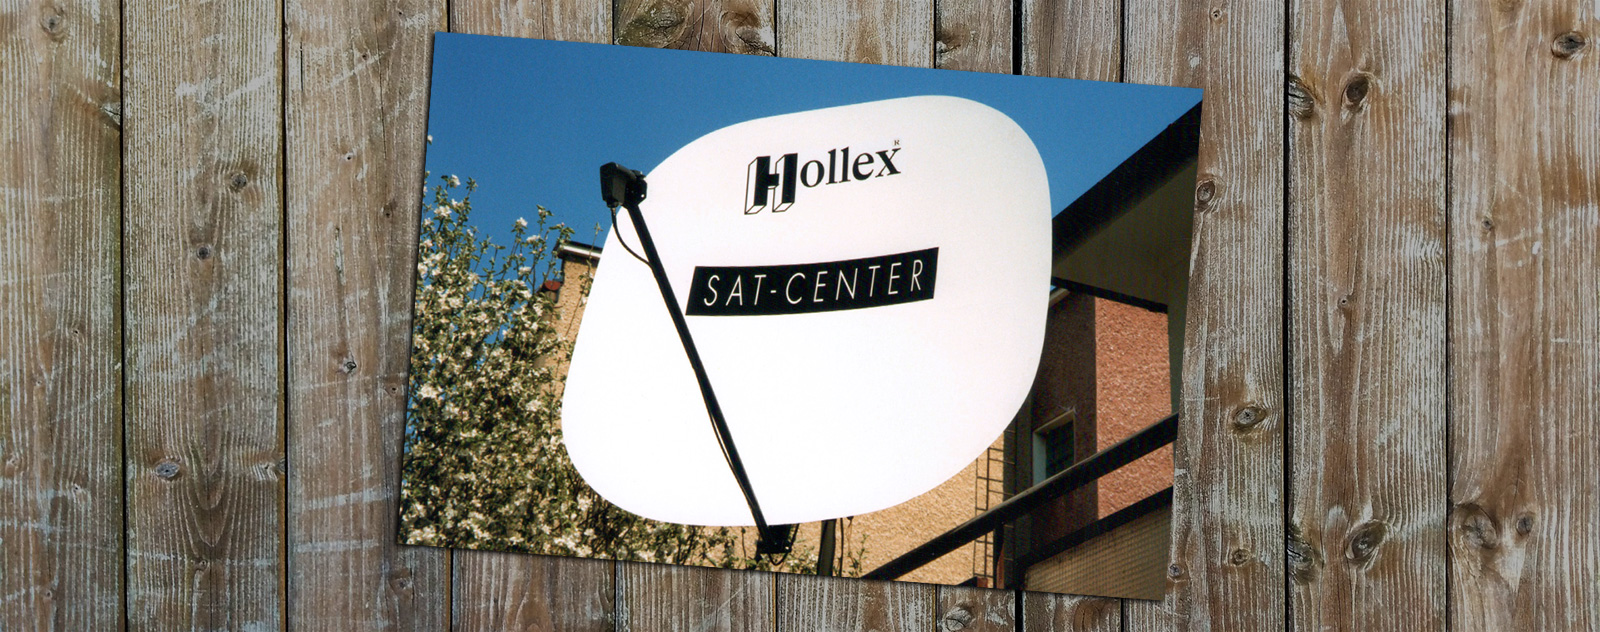 Hollex Sat-Center